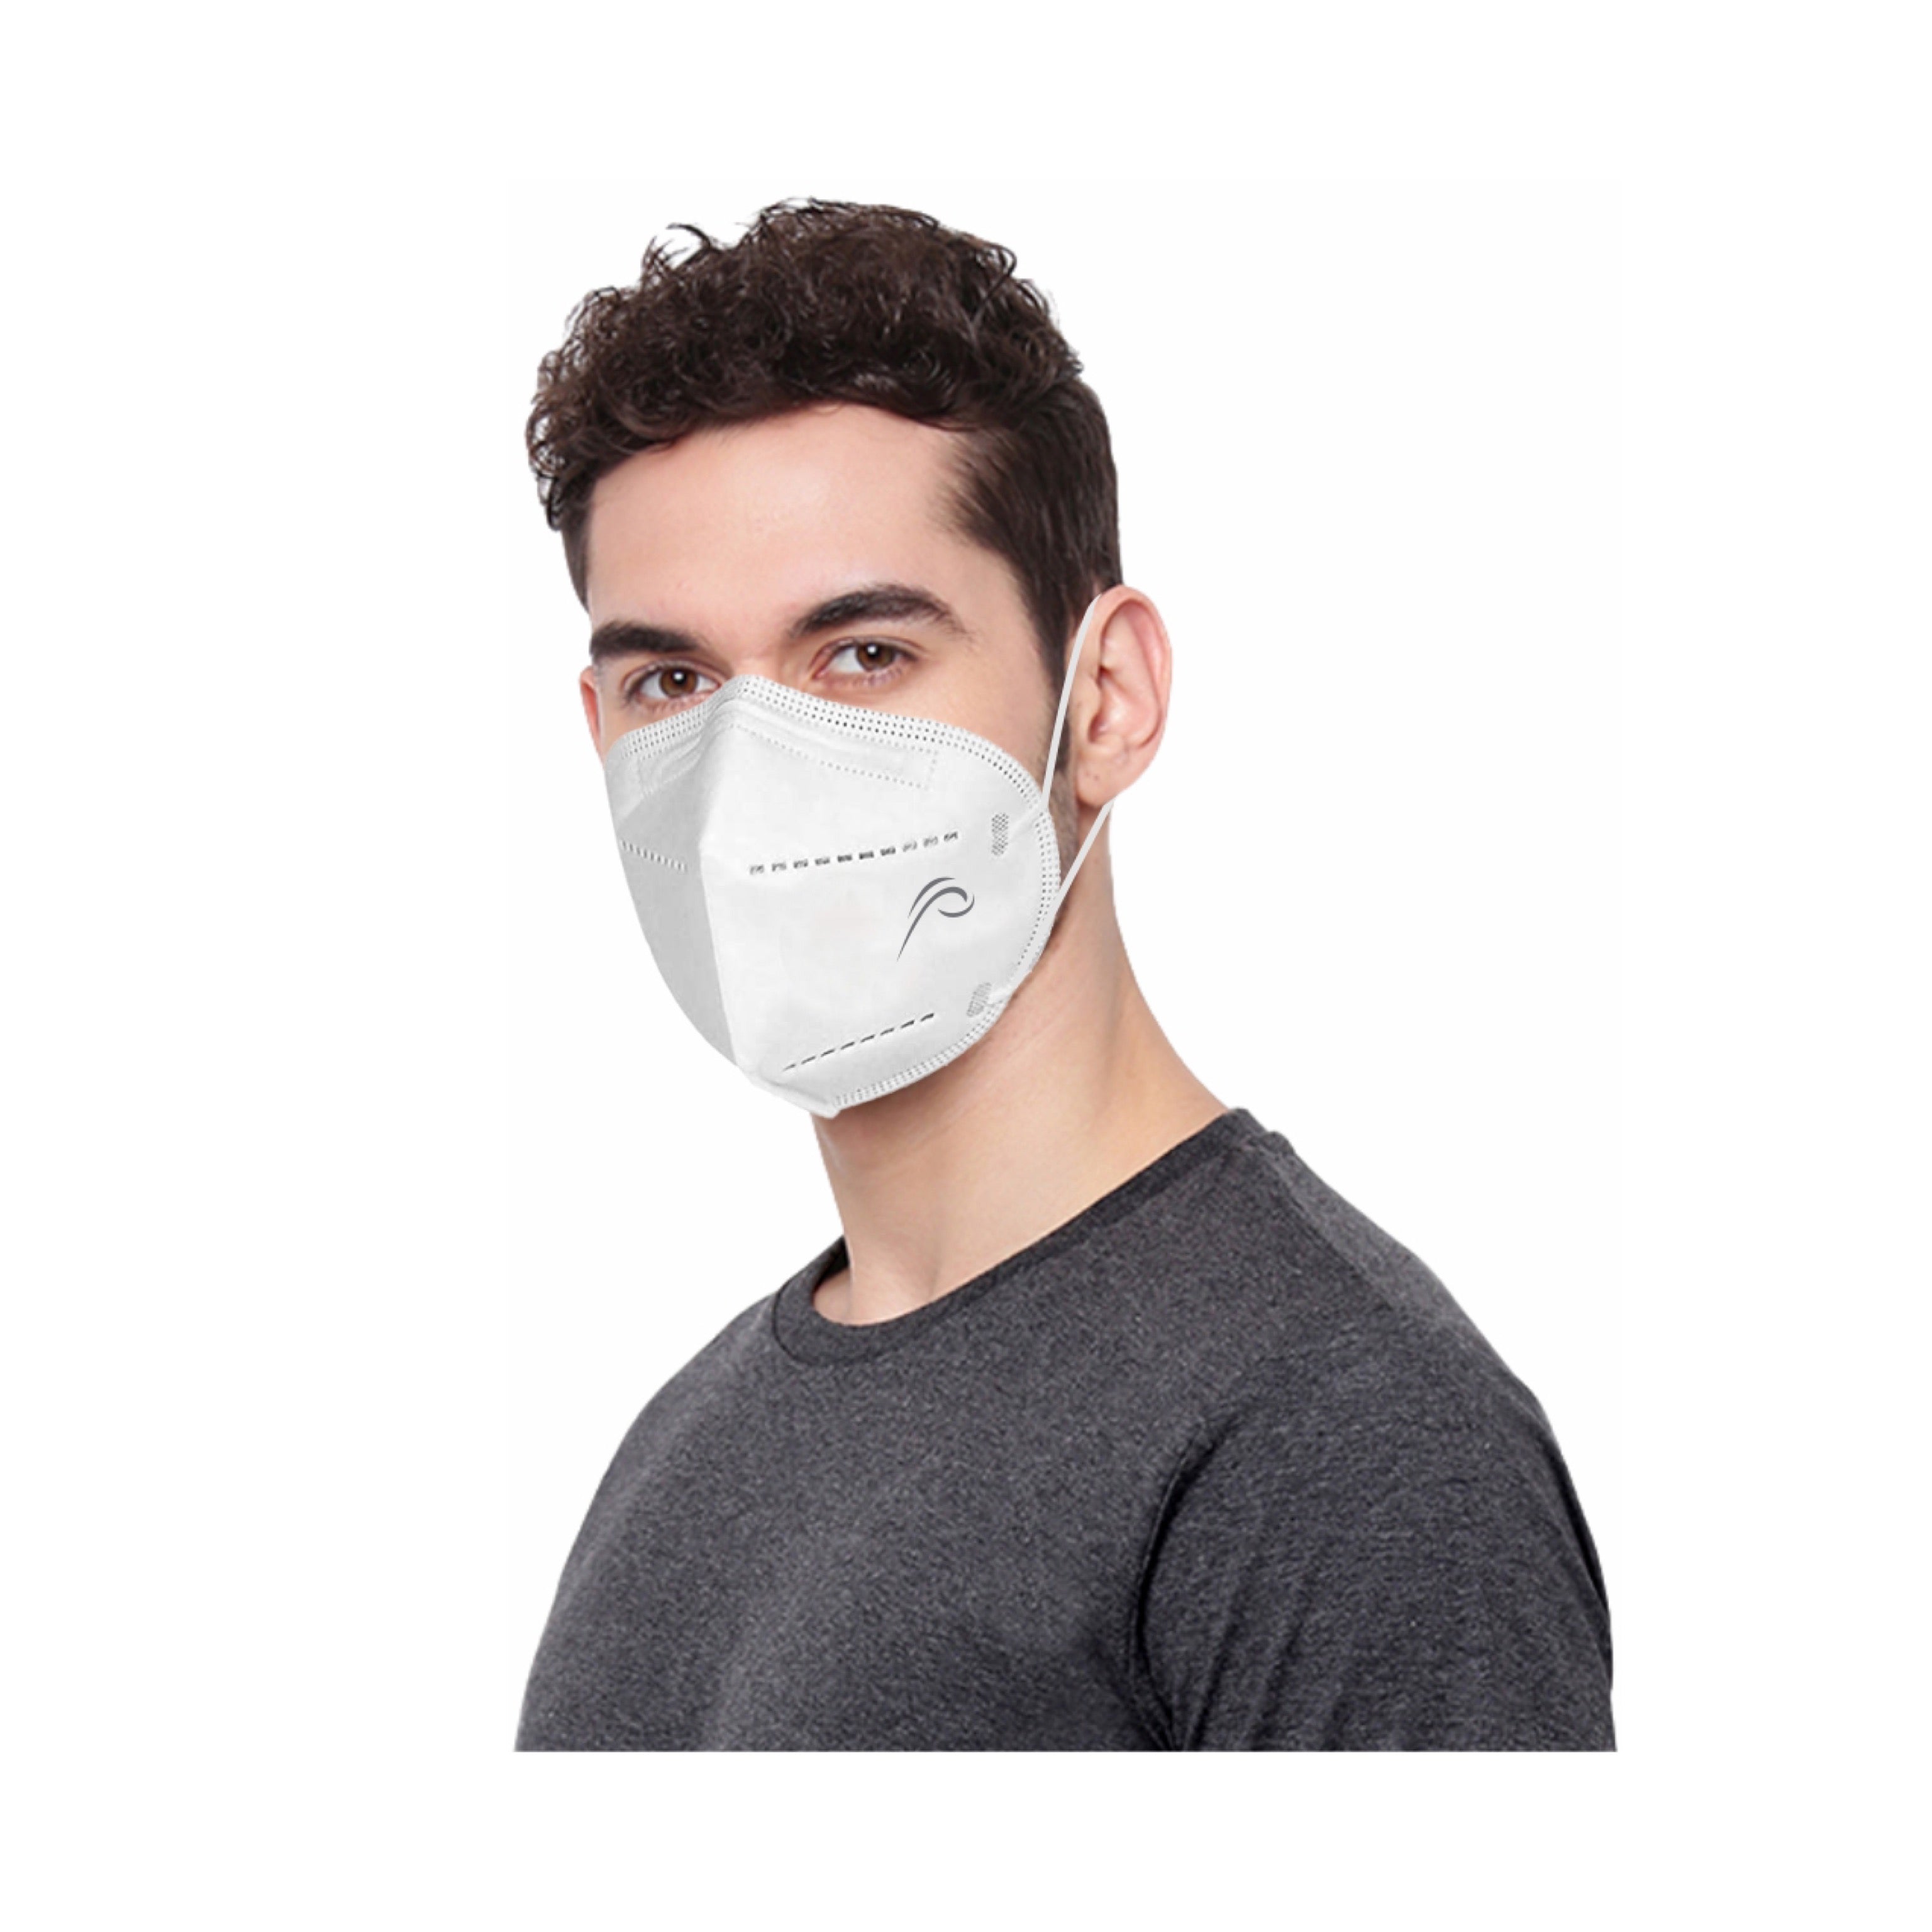 Poomer N95 Face Mask - 5 layer Anti-Bacterial & Anti-Viral Mask (Pack of 9)